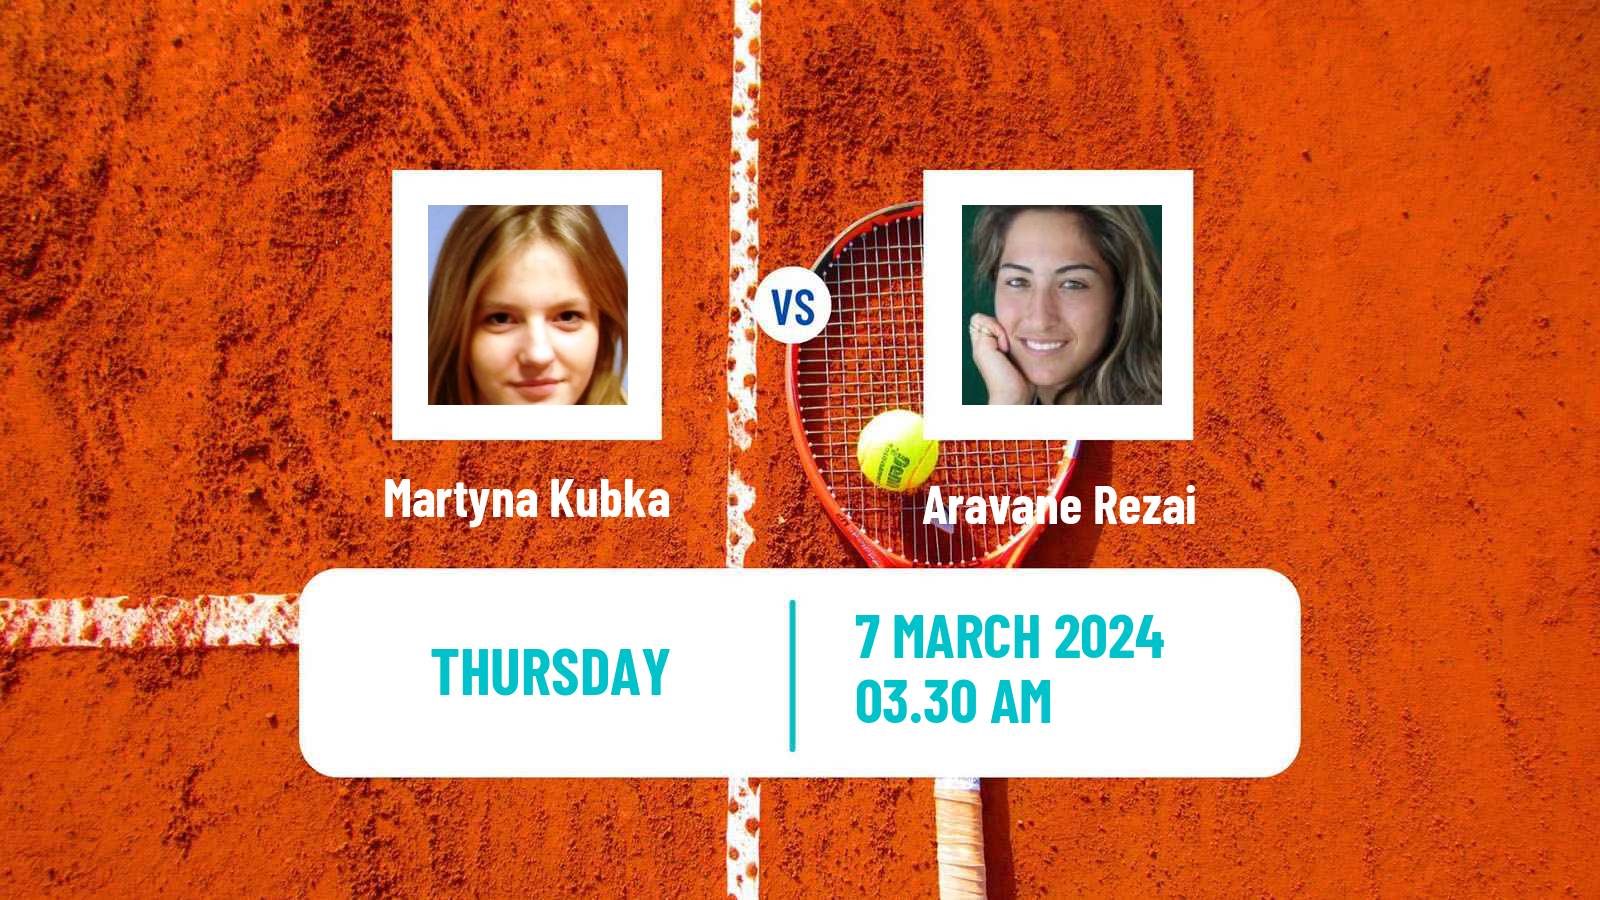 Tennis ITF W35 Solarino Women Martyna Kubka - Aravane Rezai